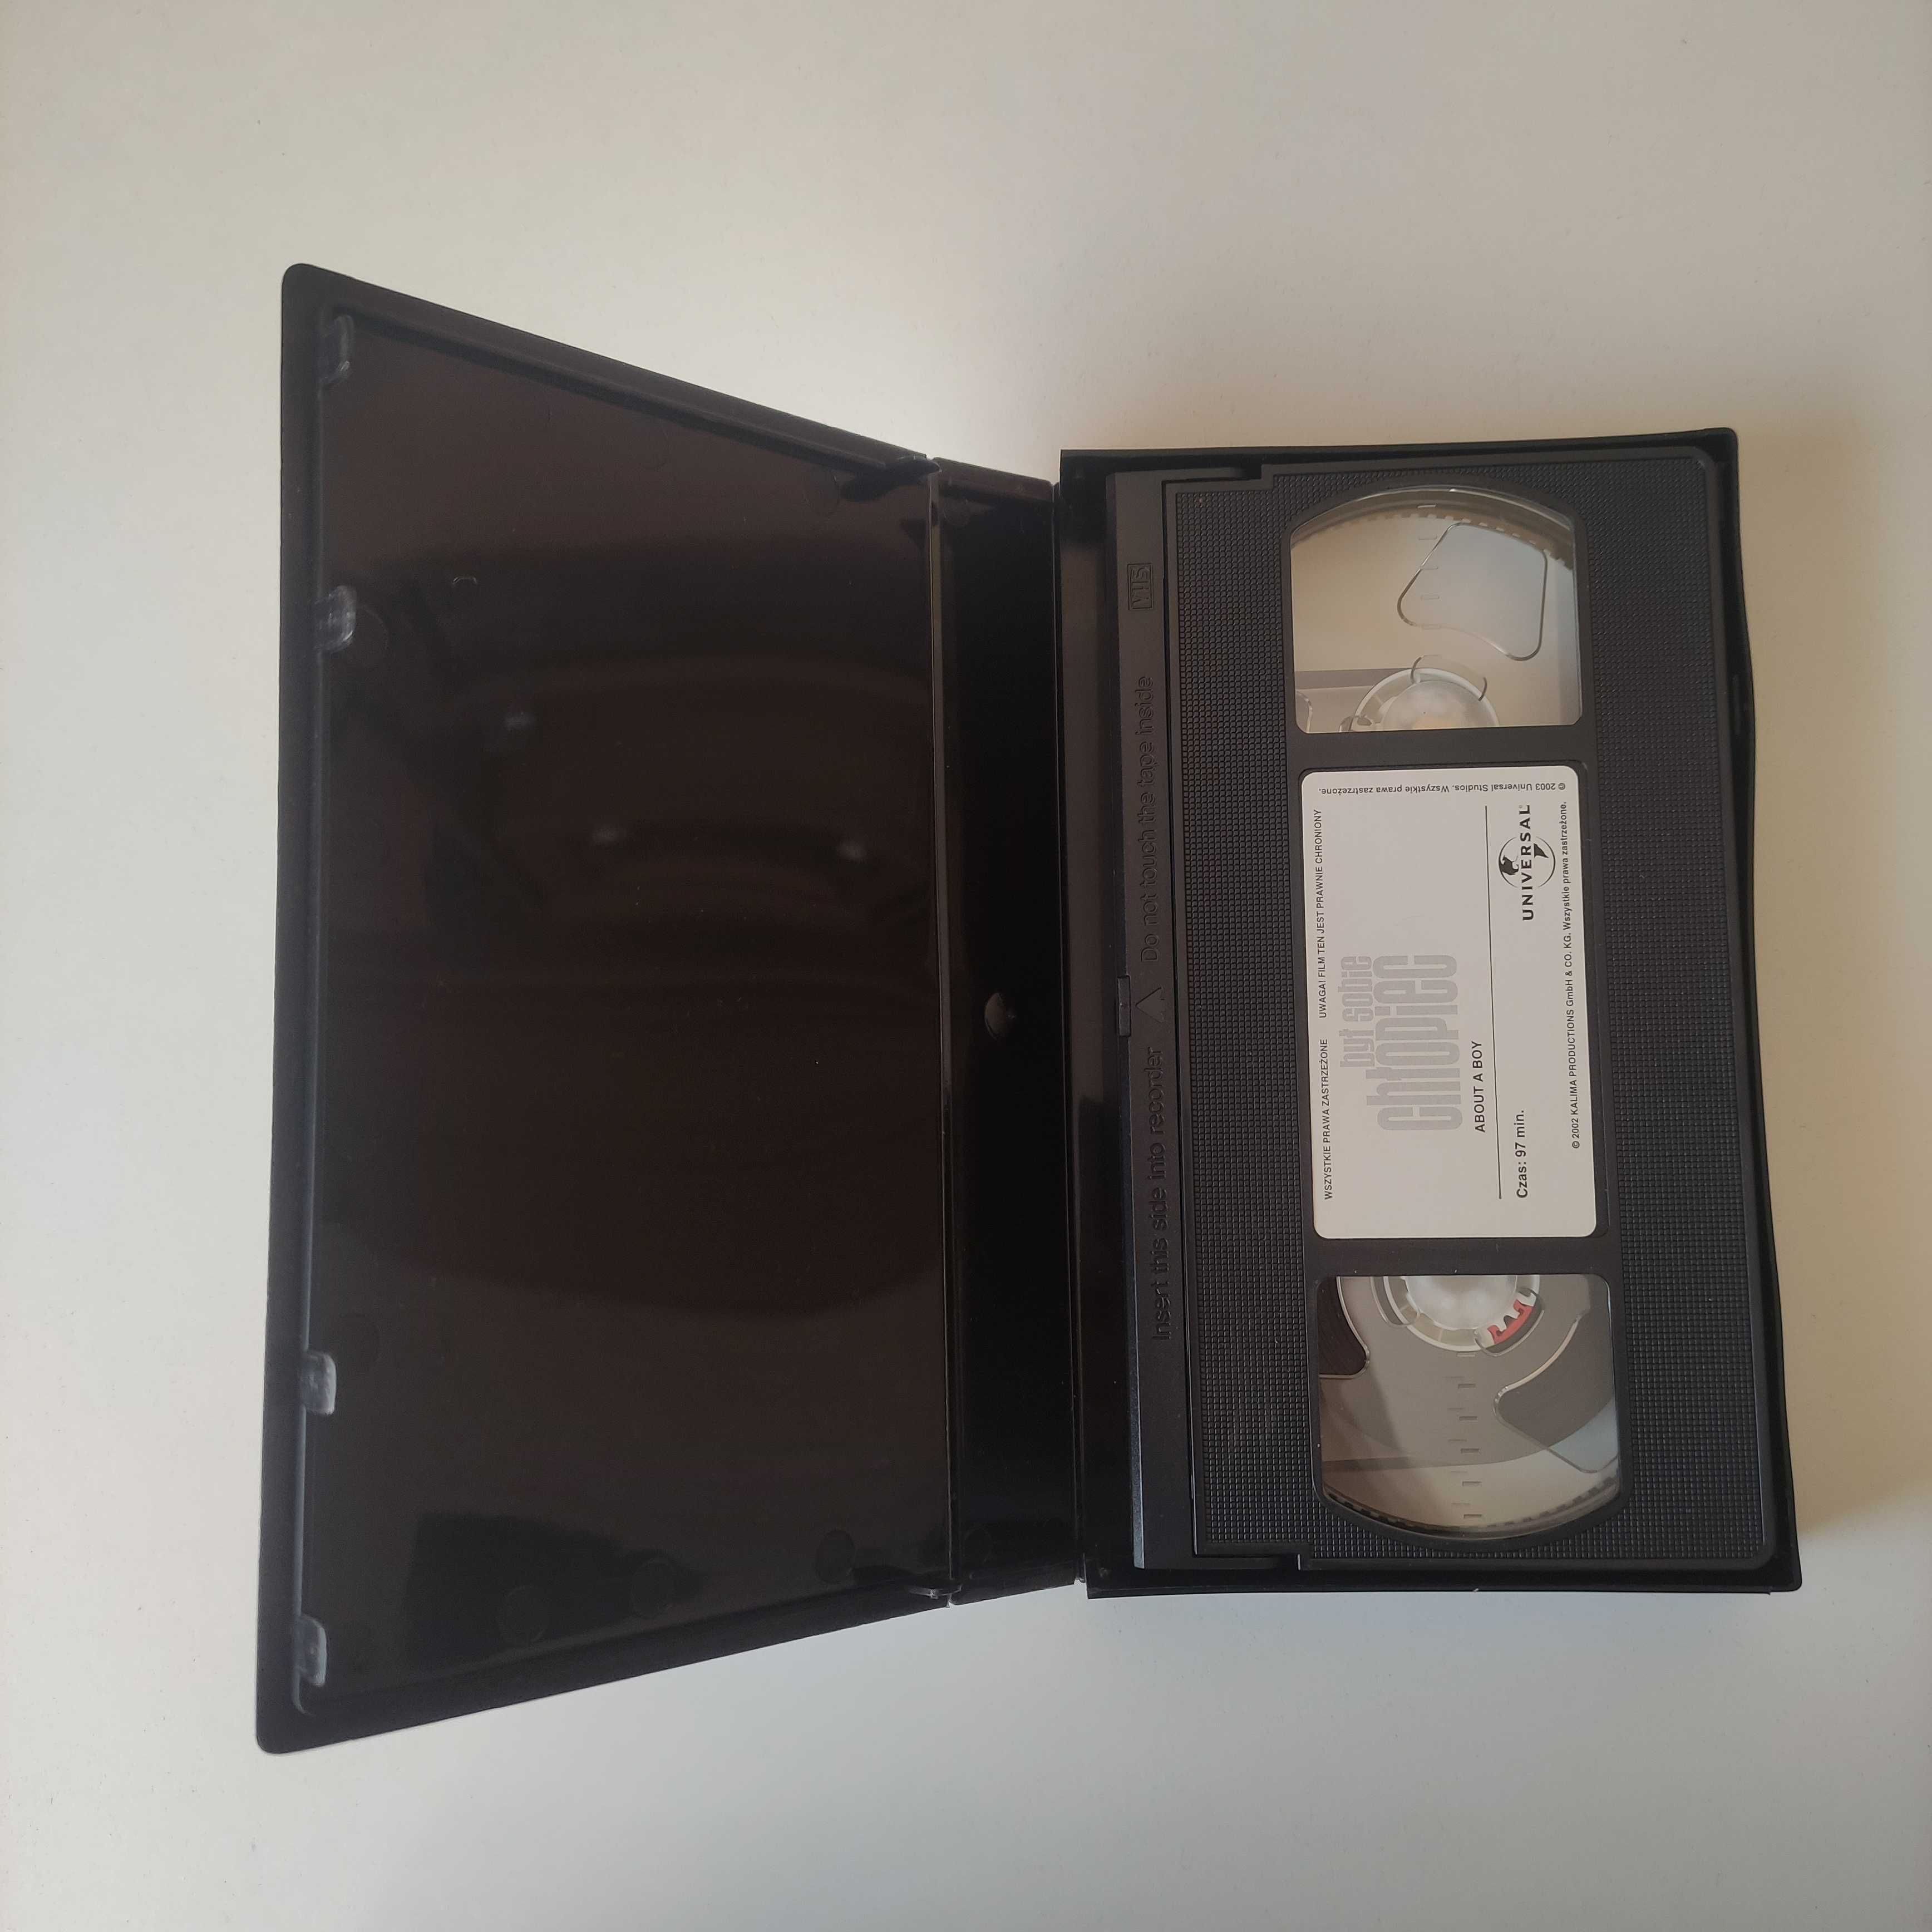 Był Sobie Chłopiec - Hugh Grant - Kaseta VHS